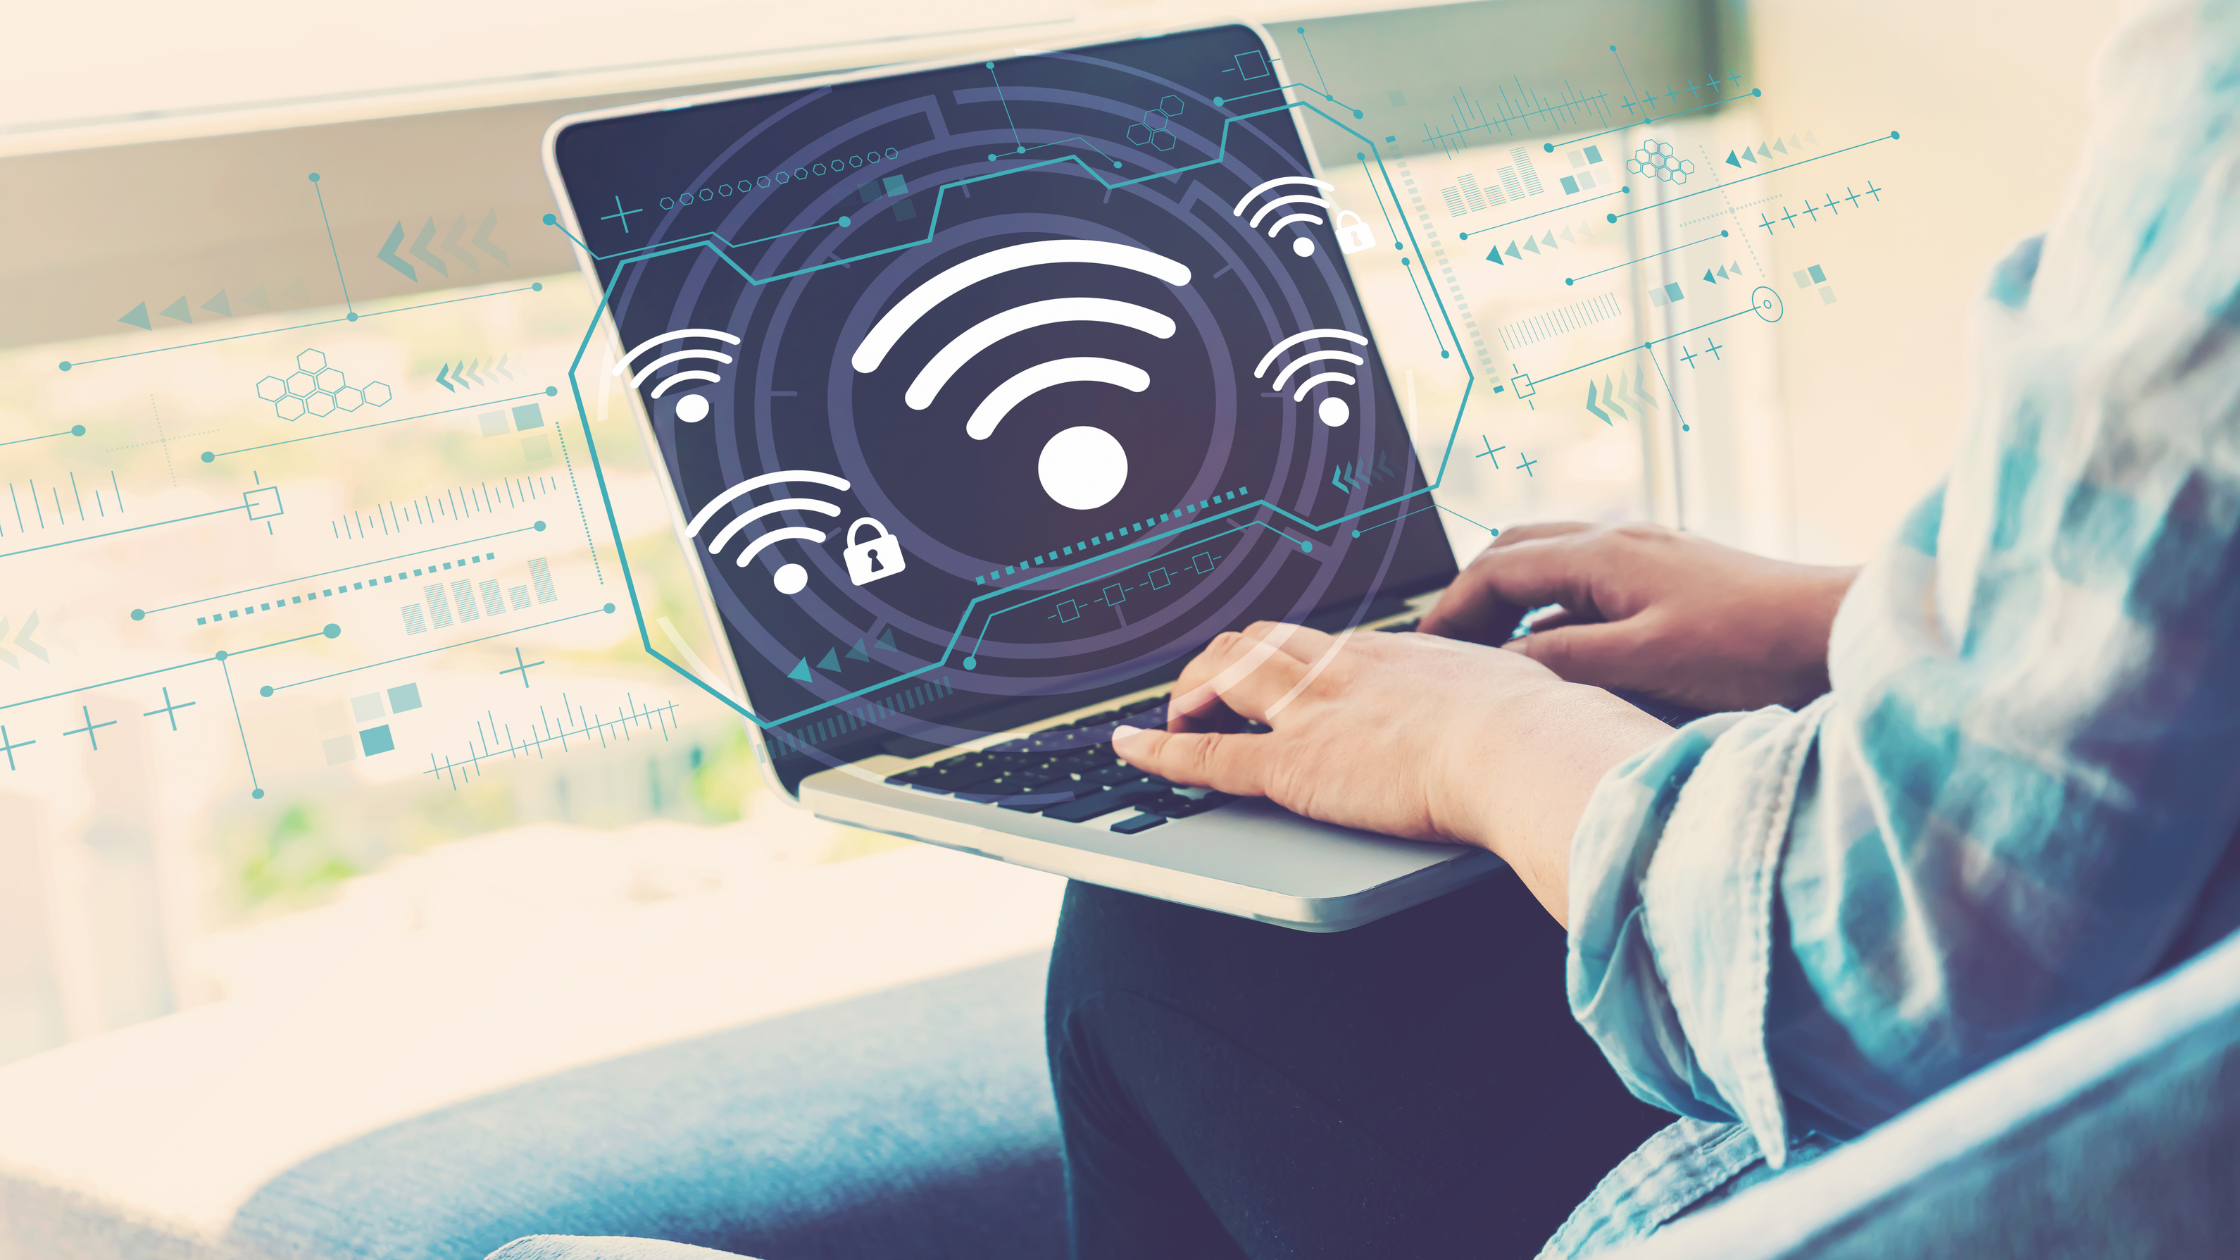 Avoid public wi-fi for remote access